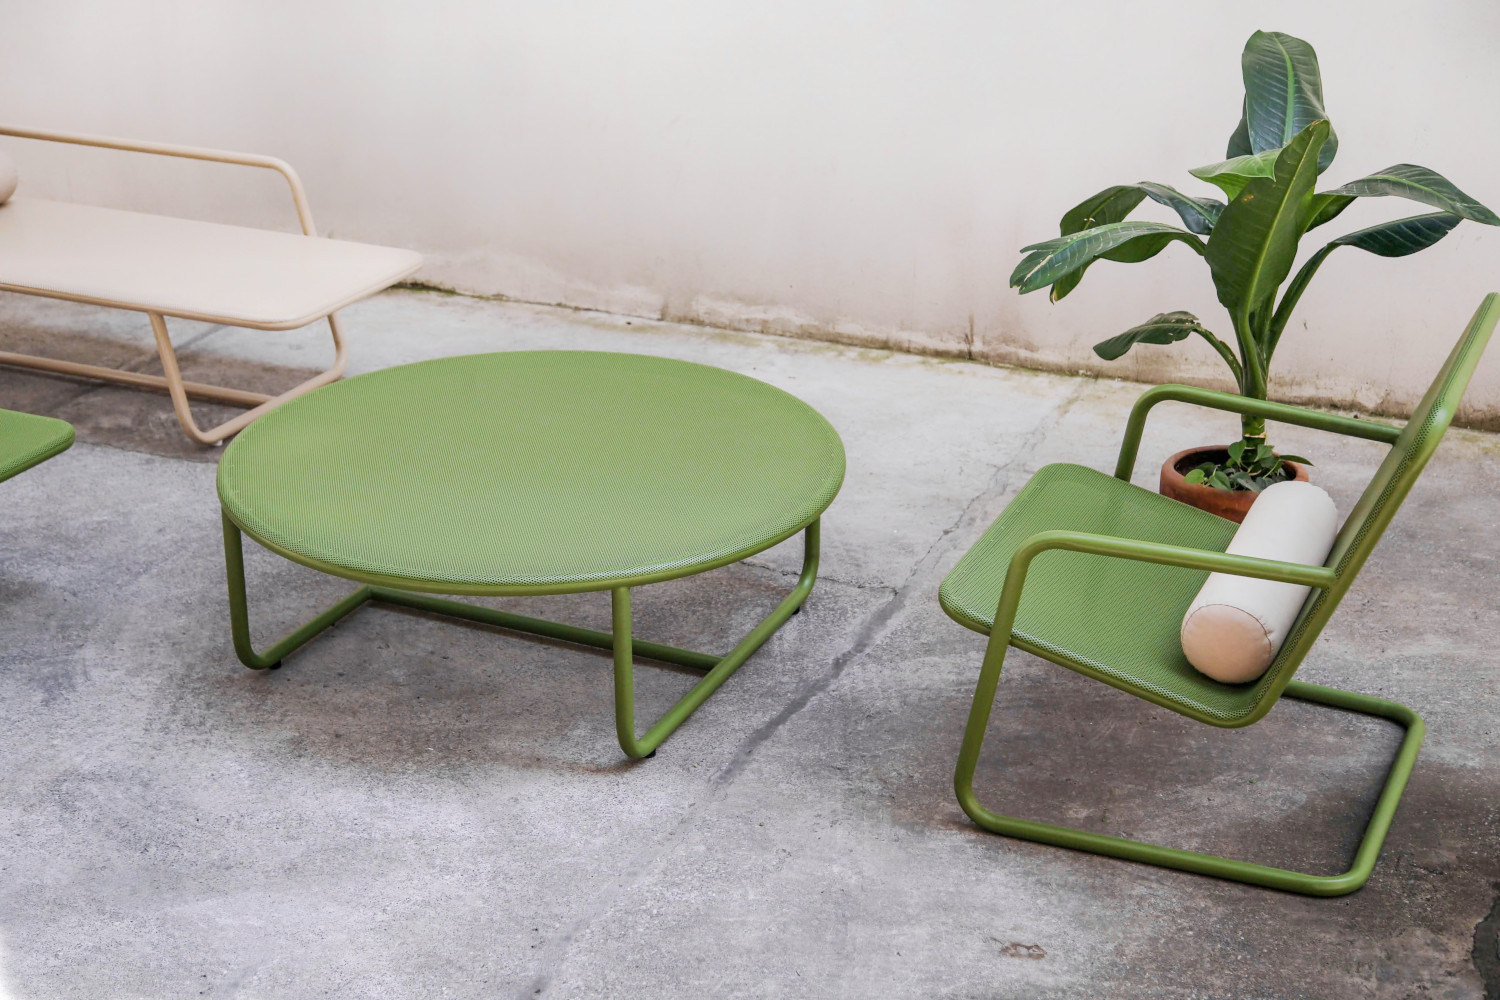 Guaymas collection de mobilier outdoor par Christian Vivanco